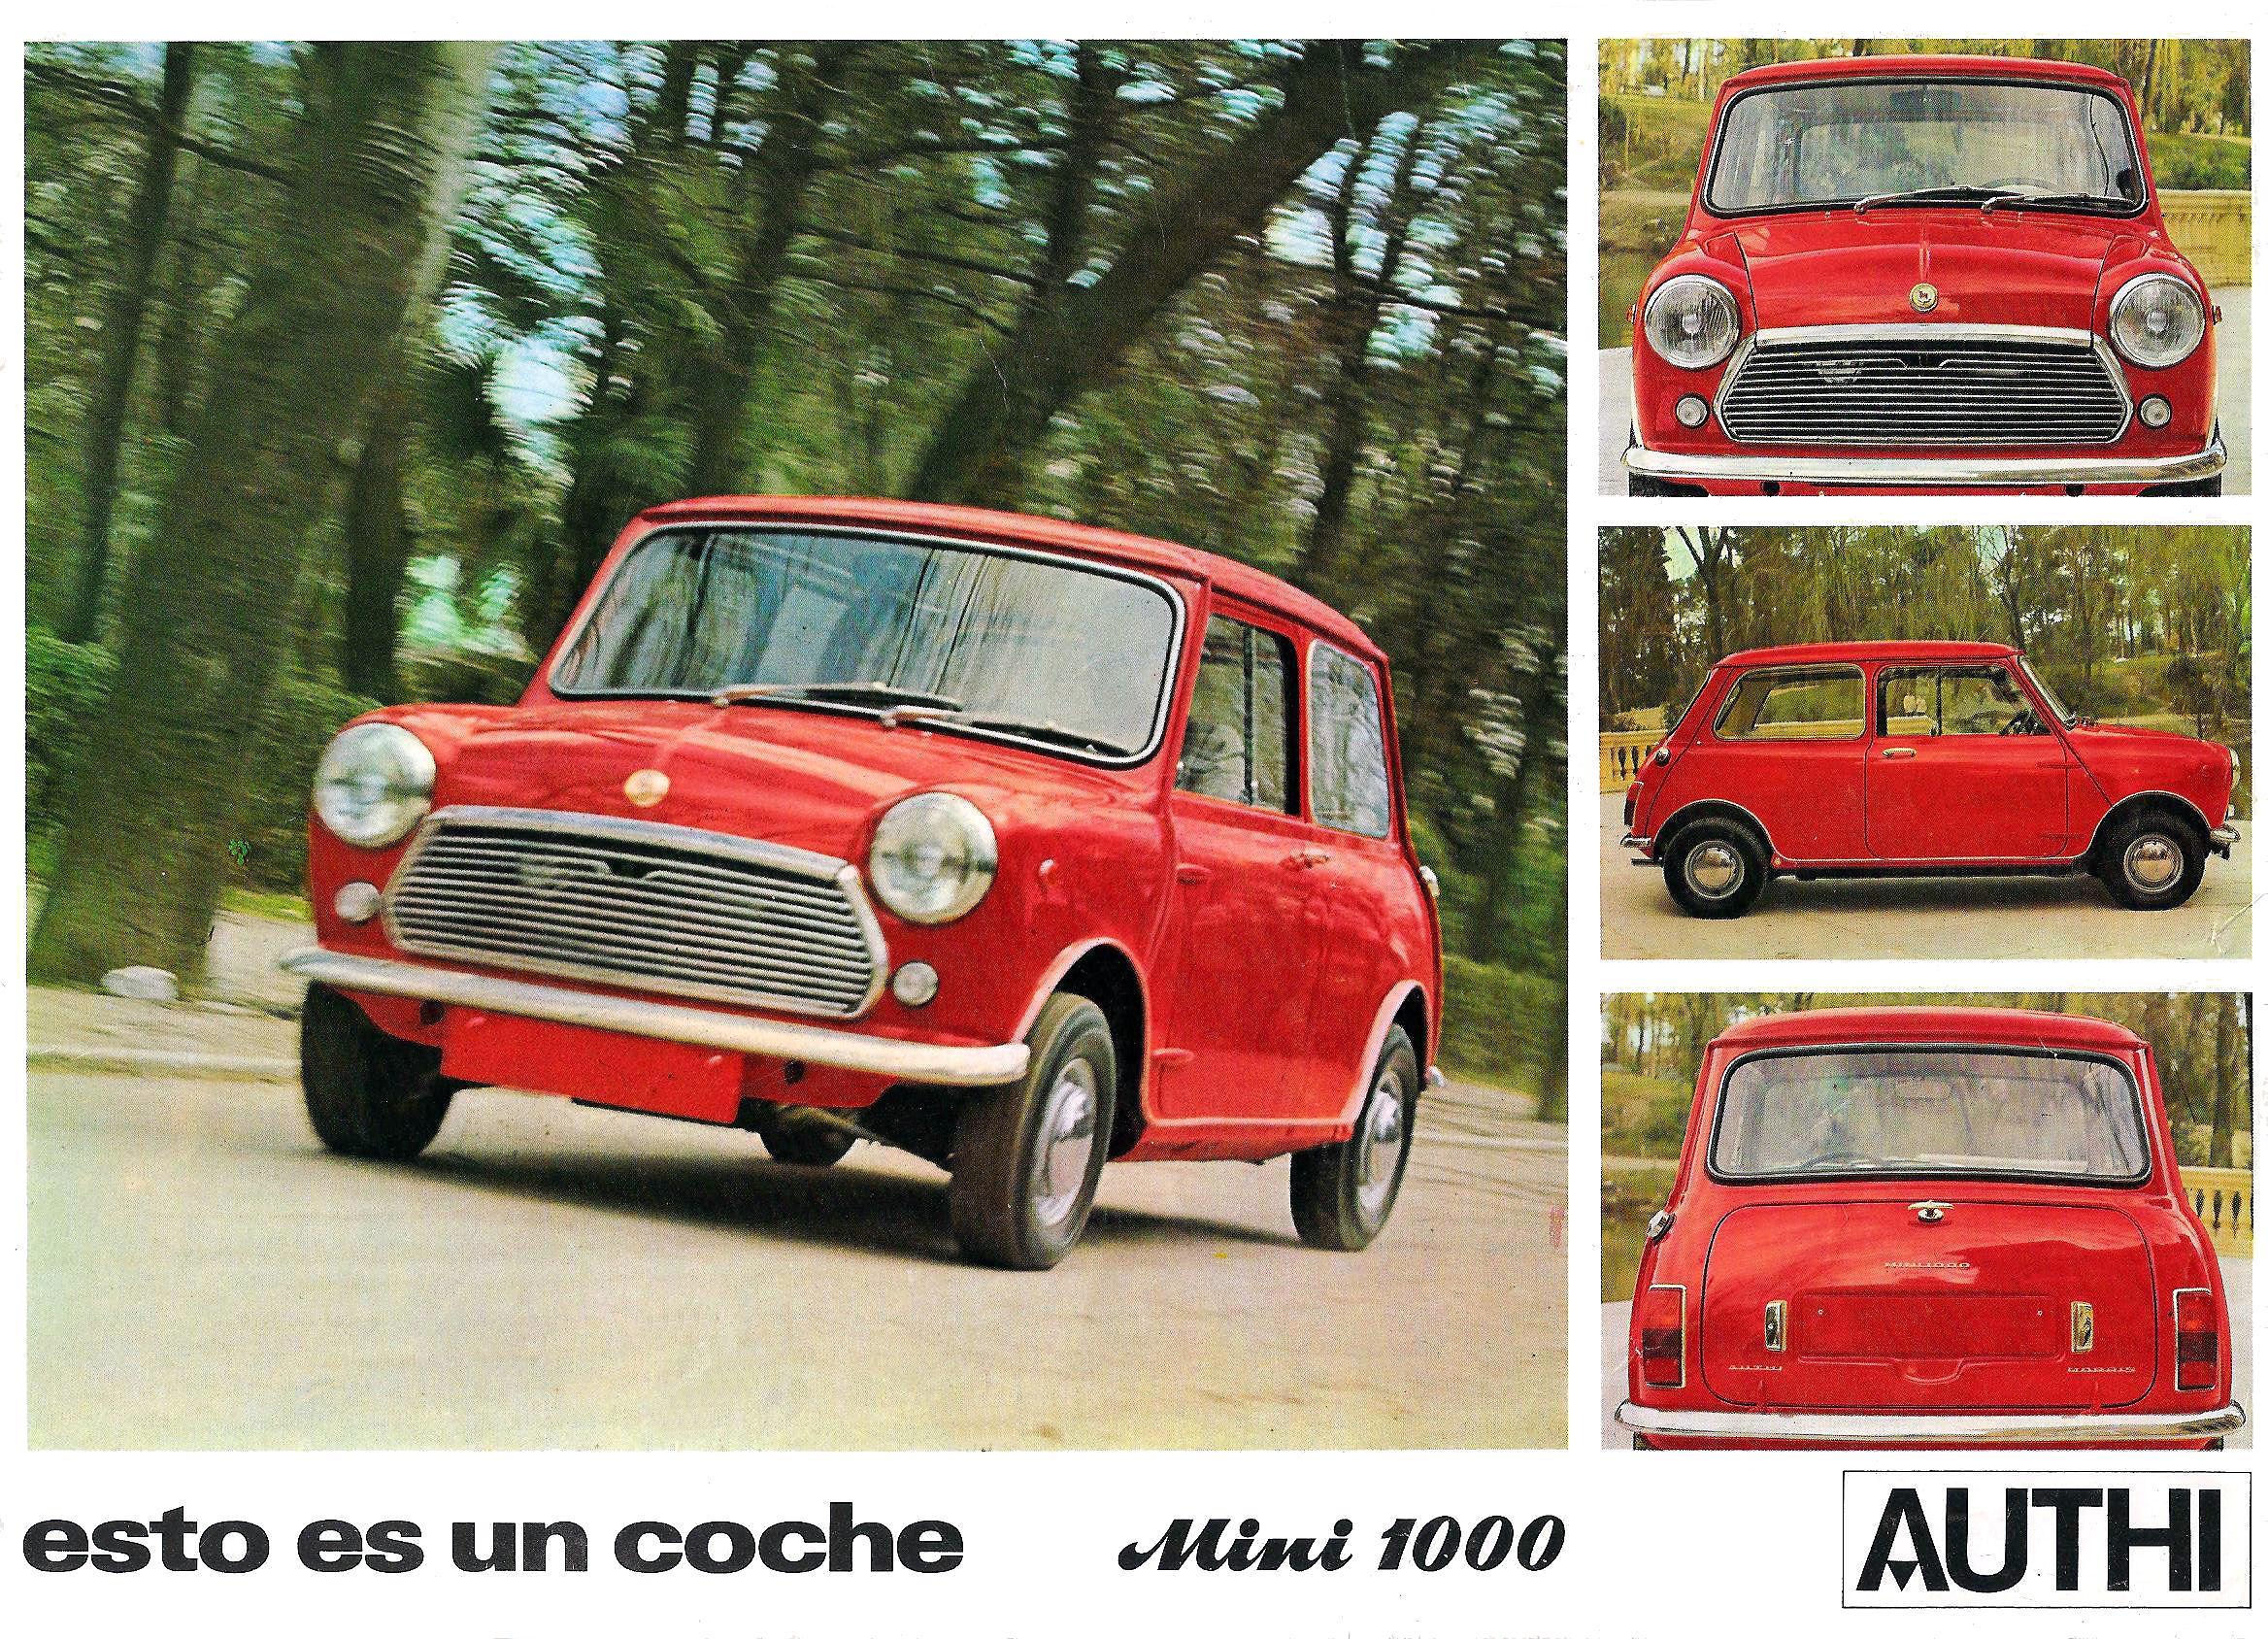 1970 Authi Mini 1000 brochure